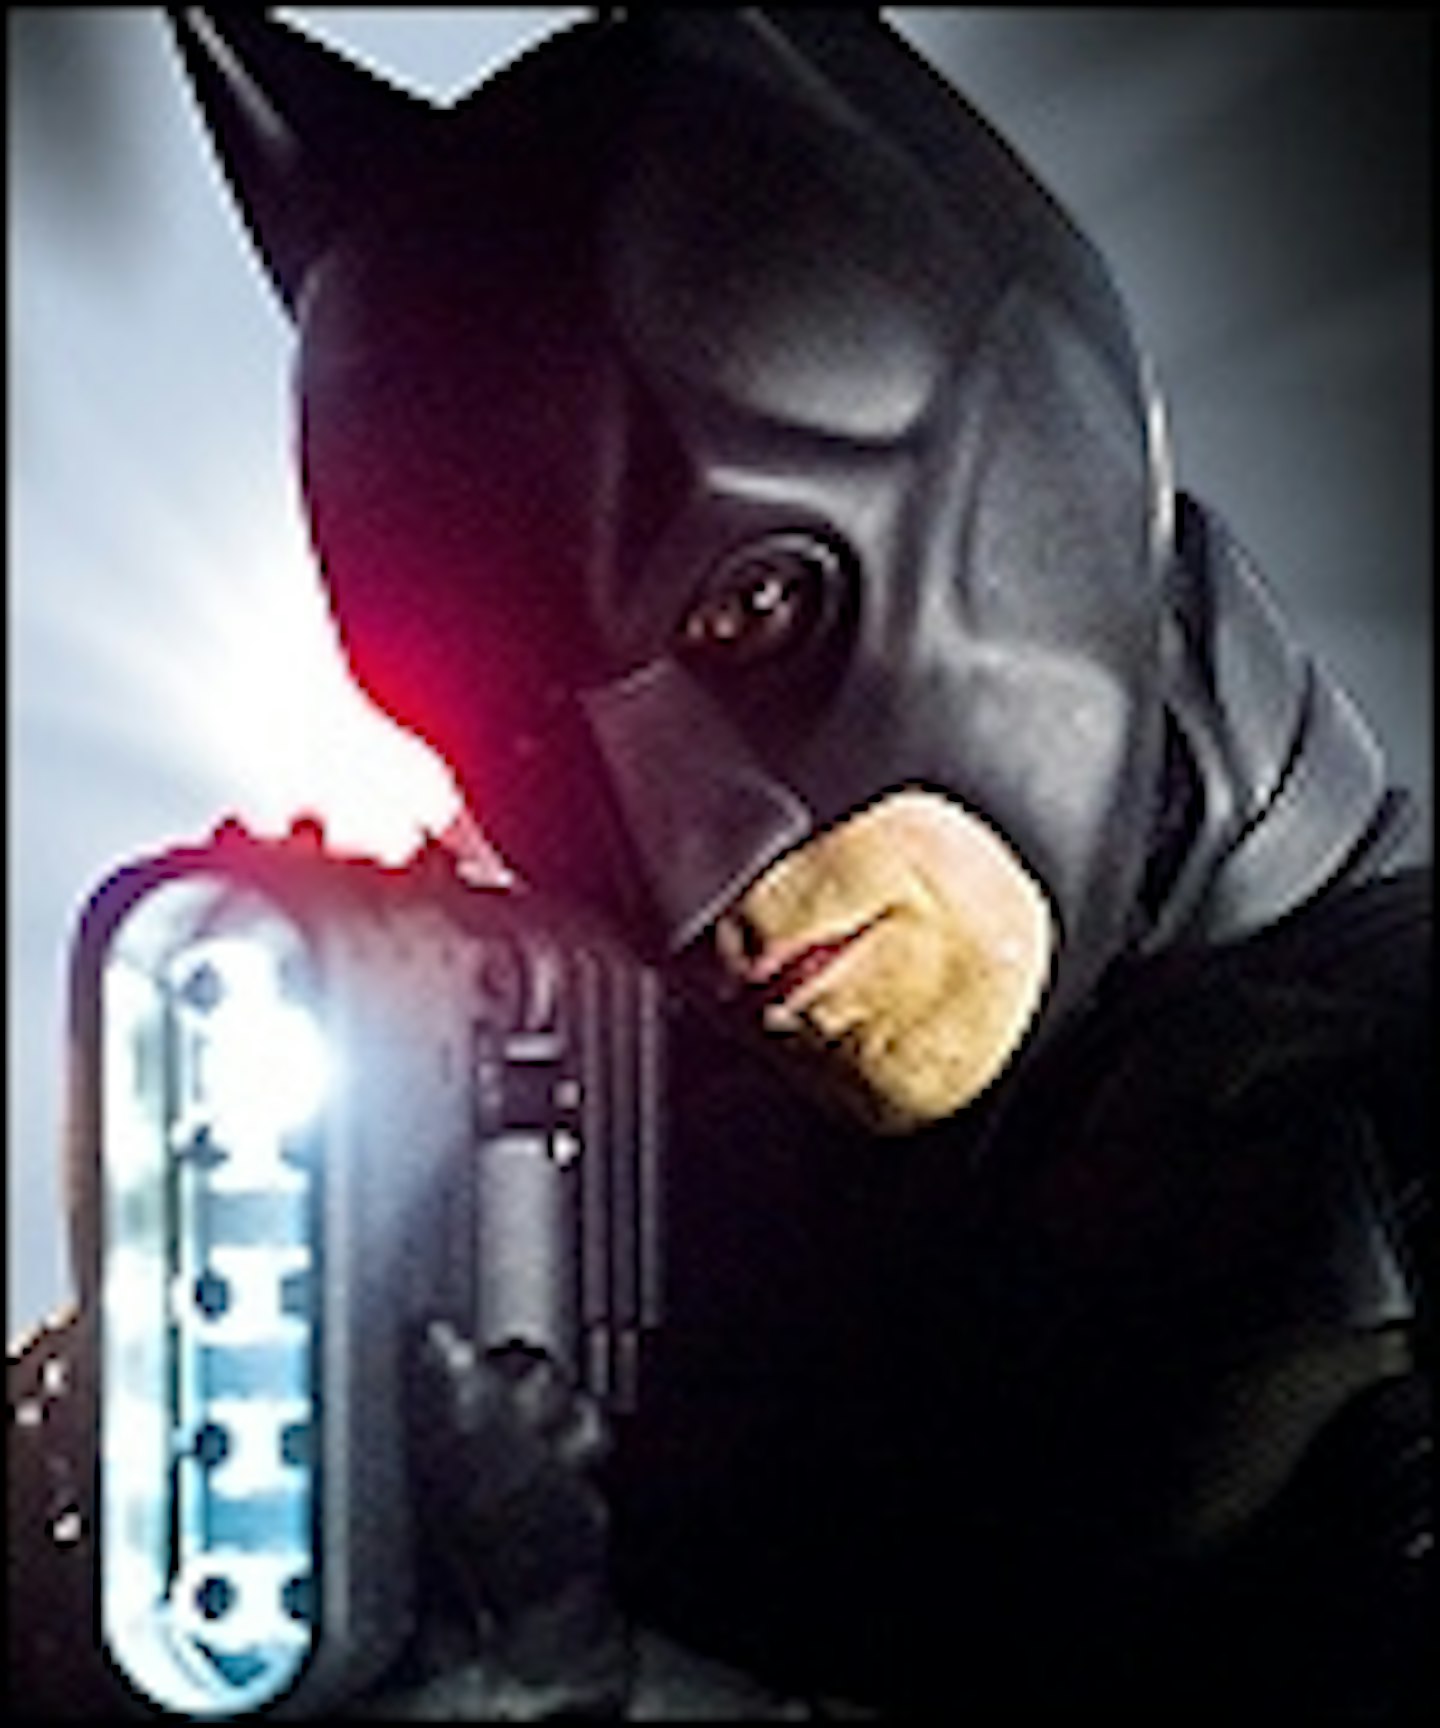 Empire's Dark Knight Rises Cover Is Here